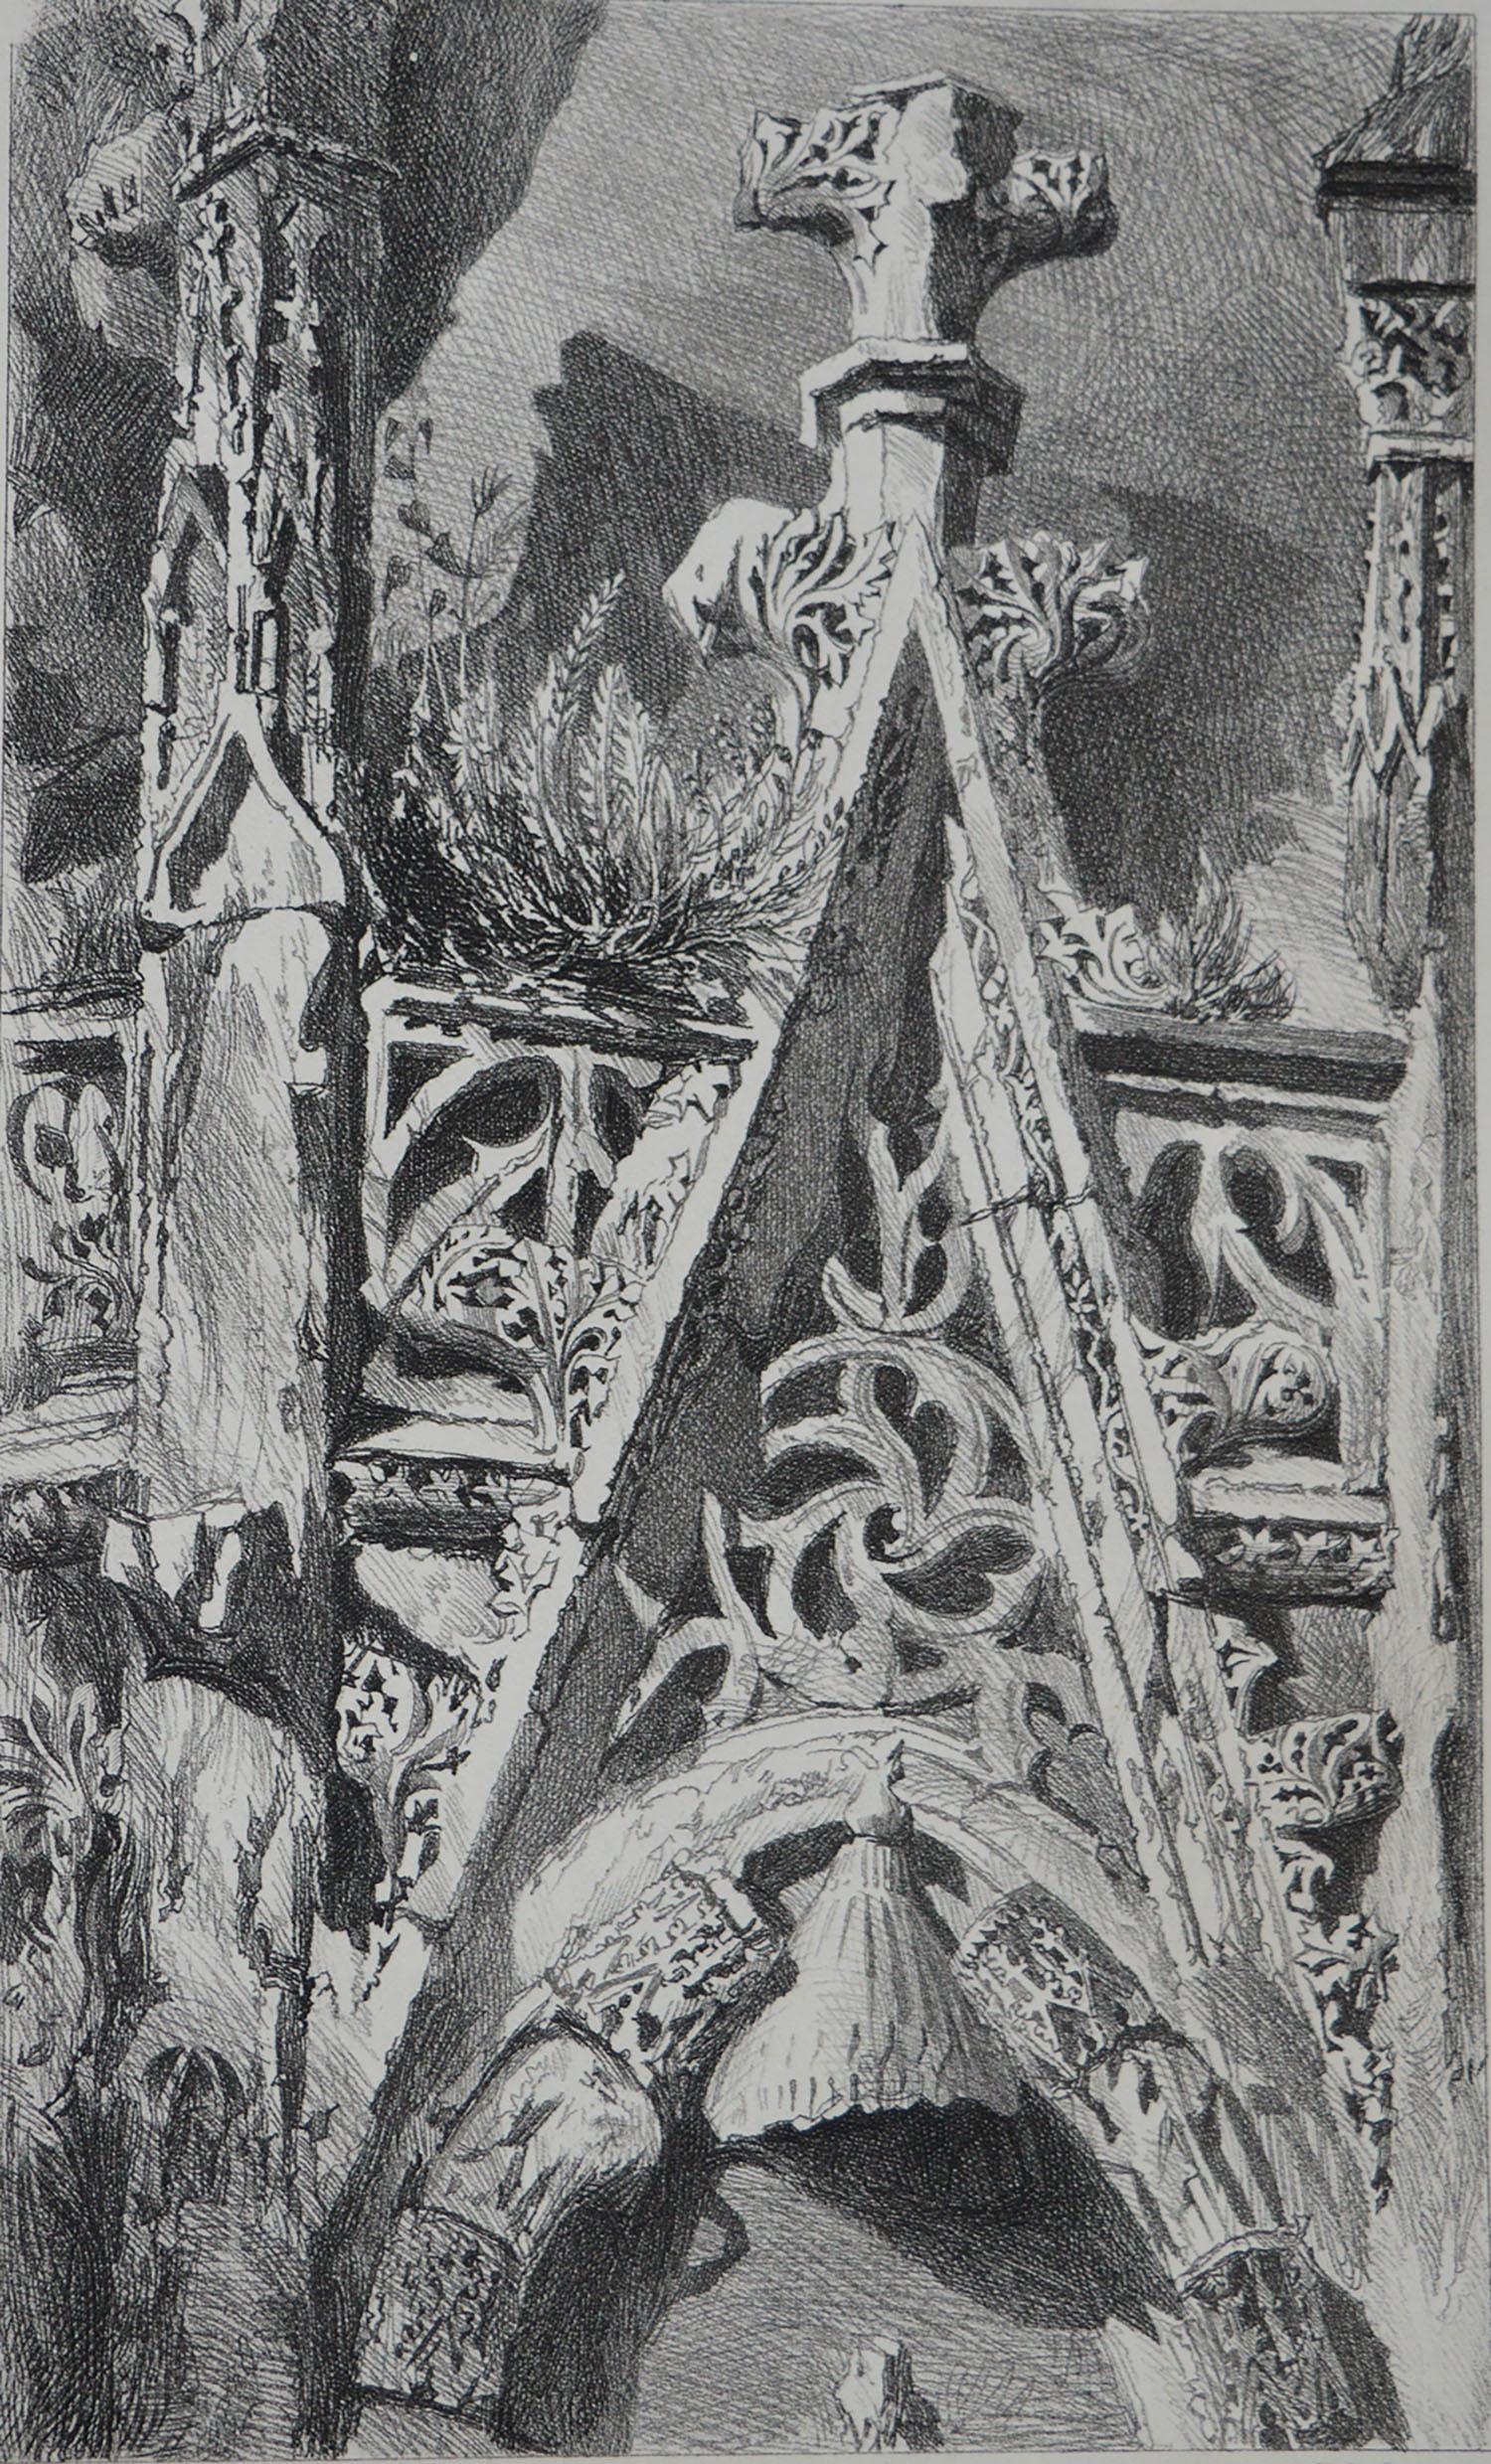 Gothic Revival Original Antique Architectural Print by John Ruskin, circa 1880 'St. Lo'